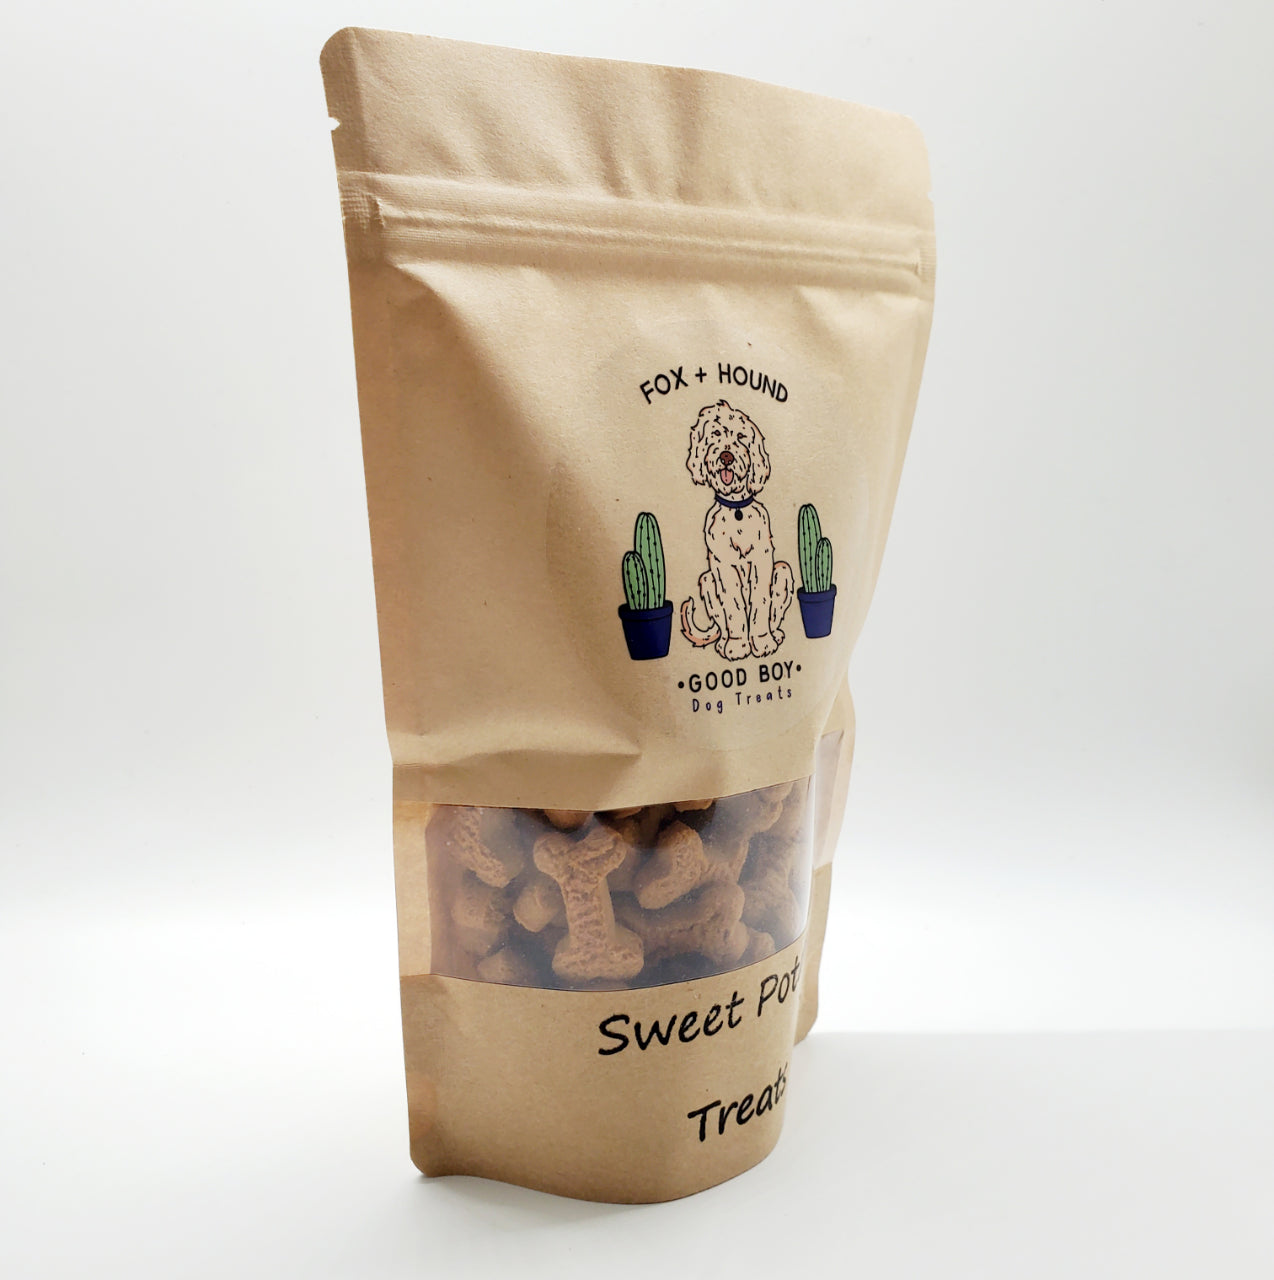 Fox + Hound | Sweet Potato Grain-Free Dog Treats